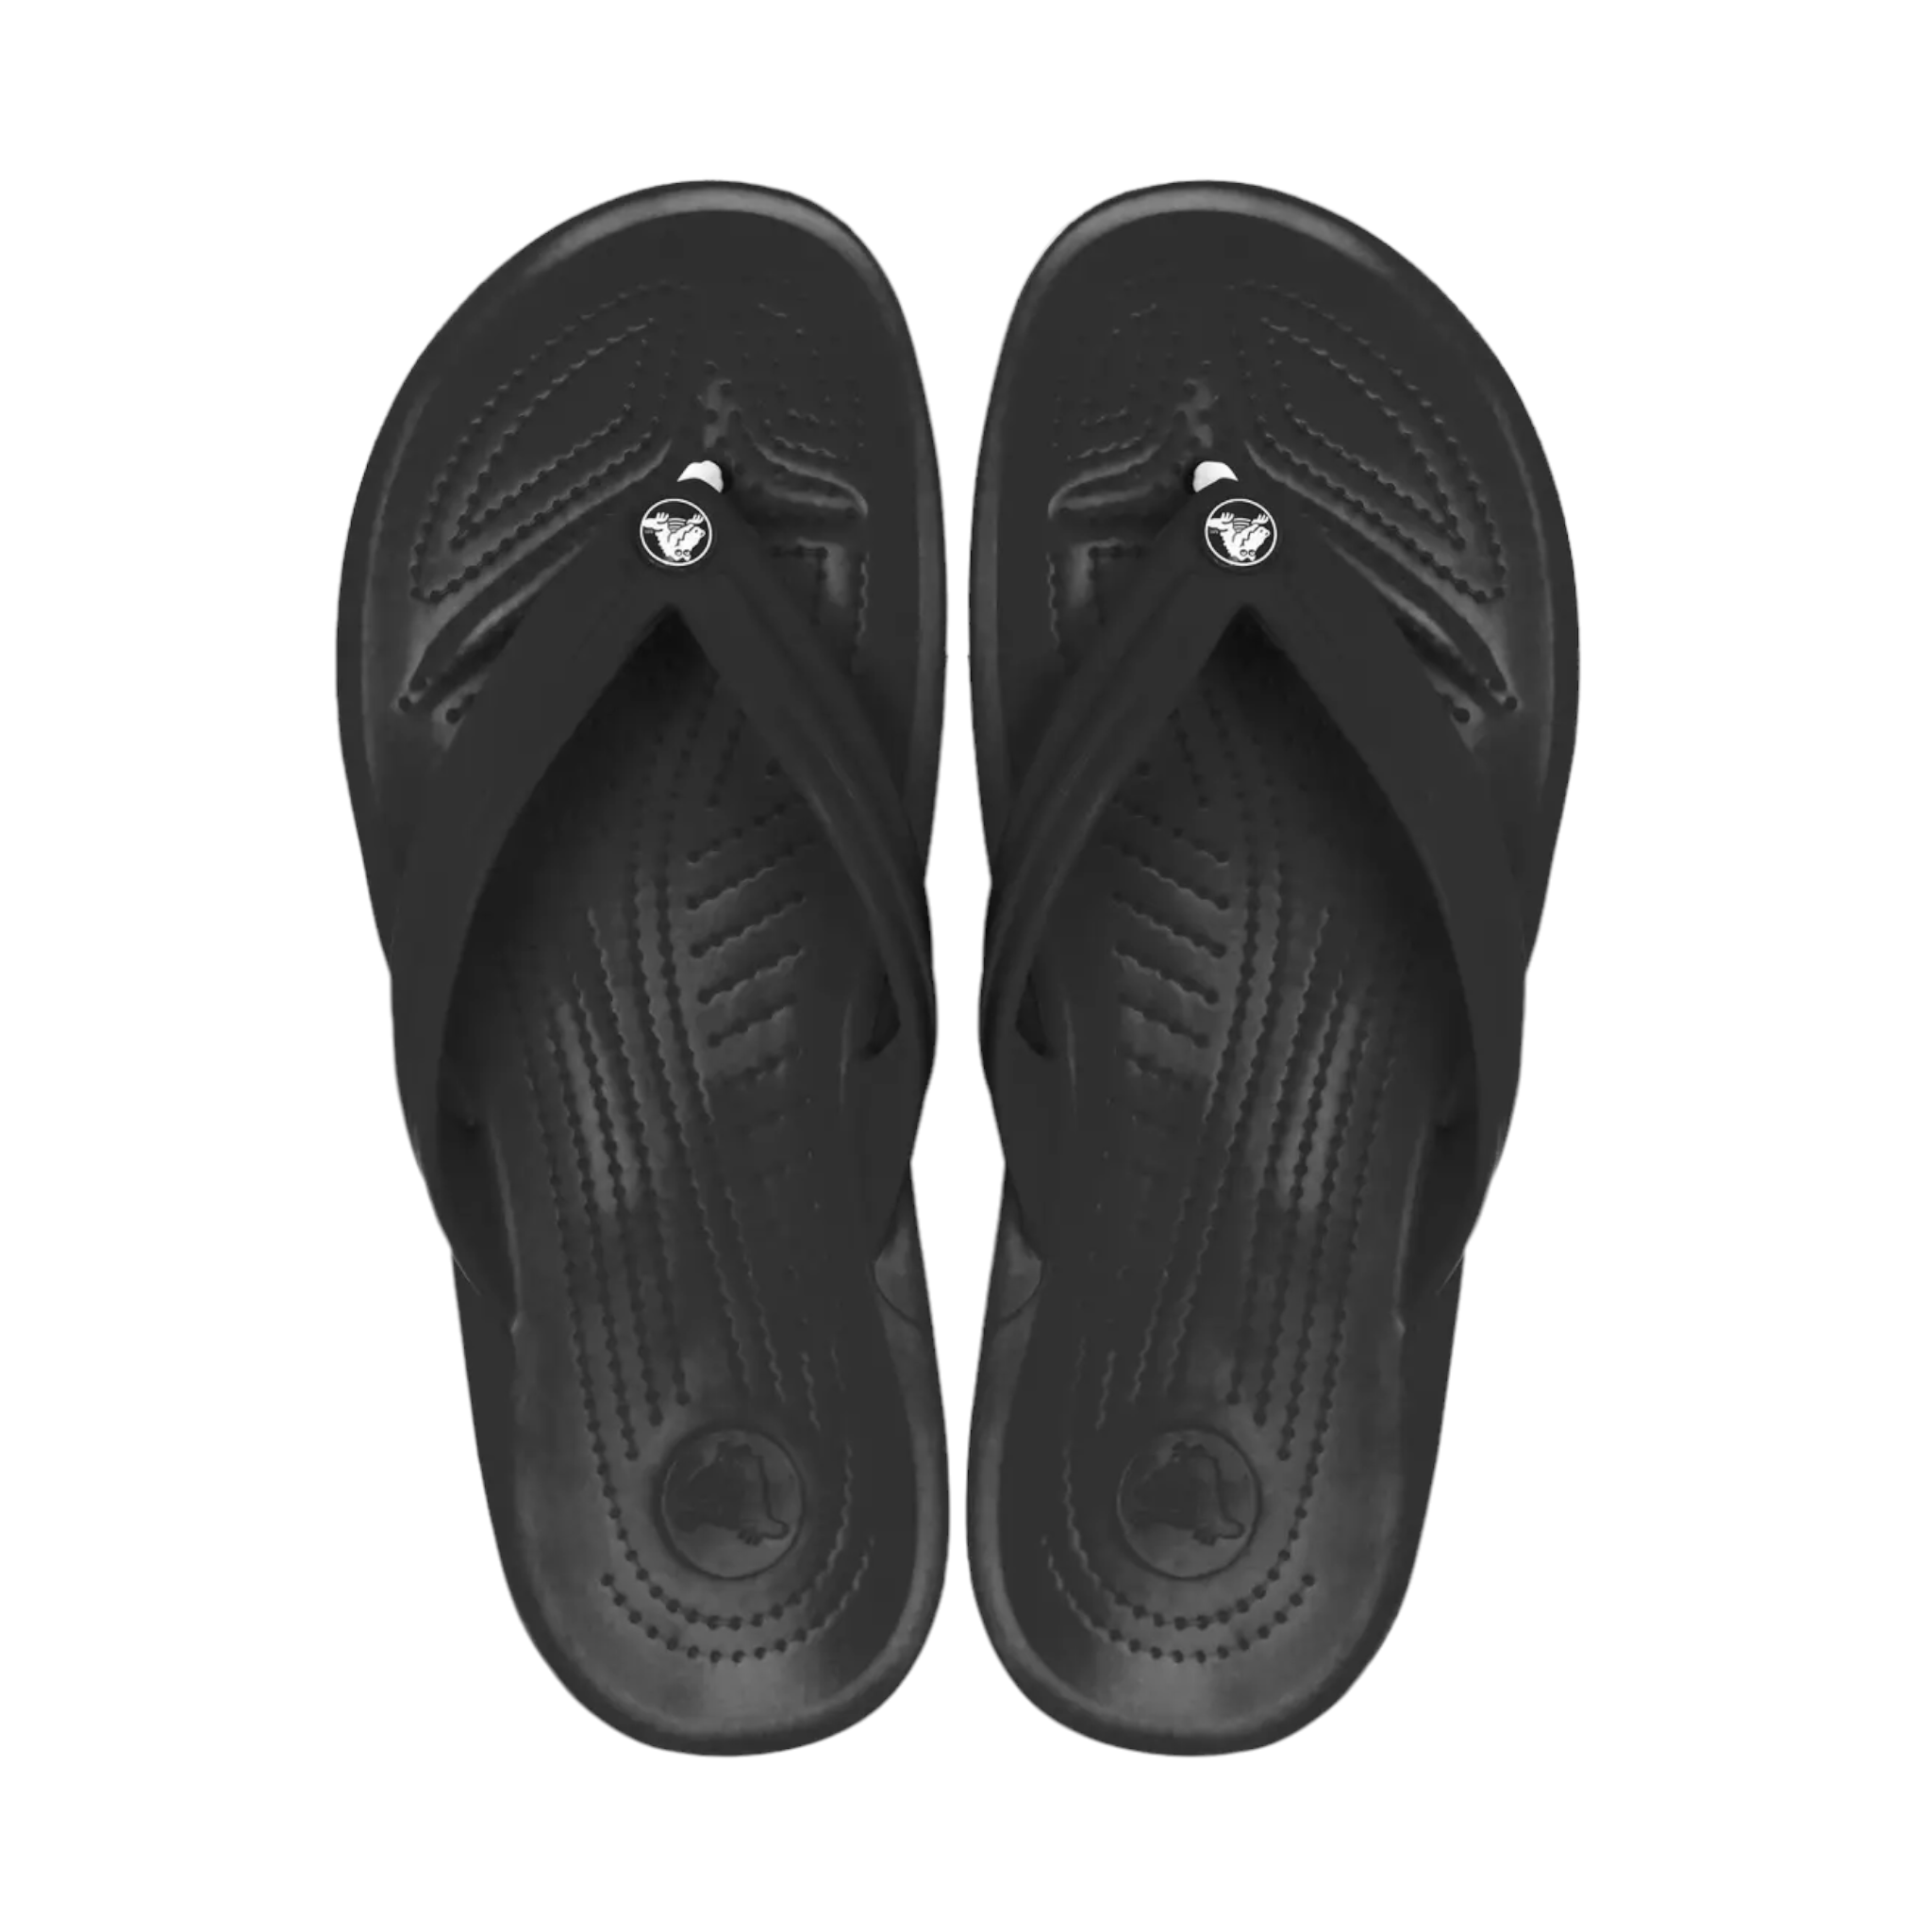 Crocband Flip - shoe&amp;me - Crocs - Jandal - Jandals, Mens, Womens